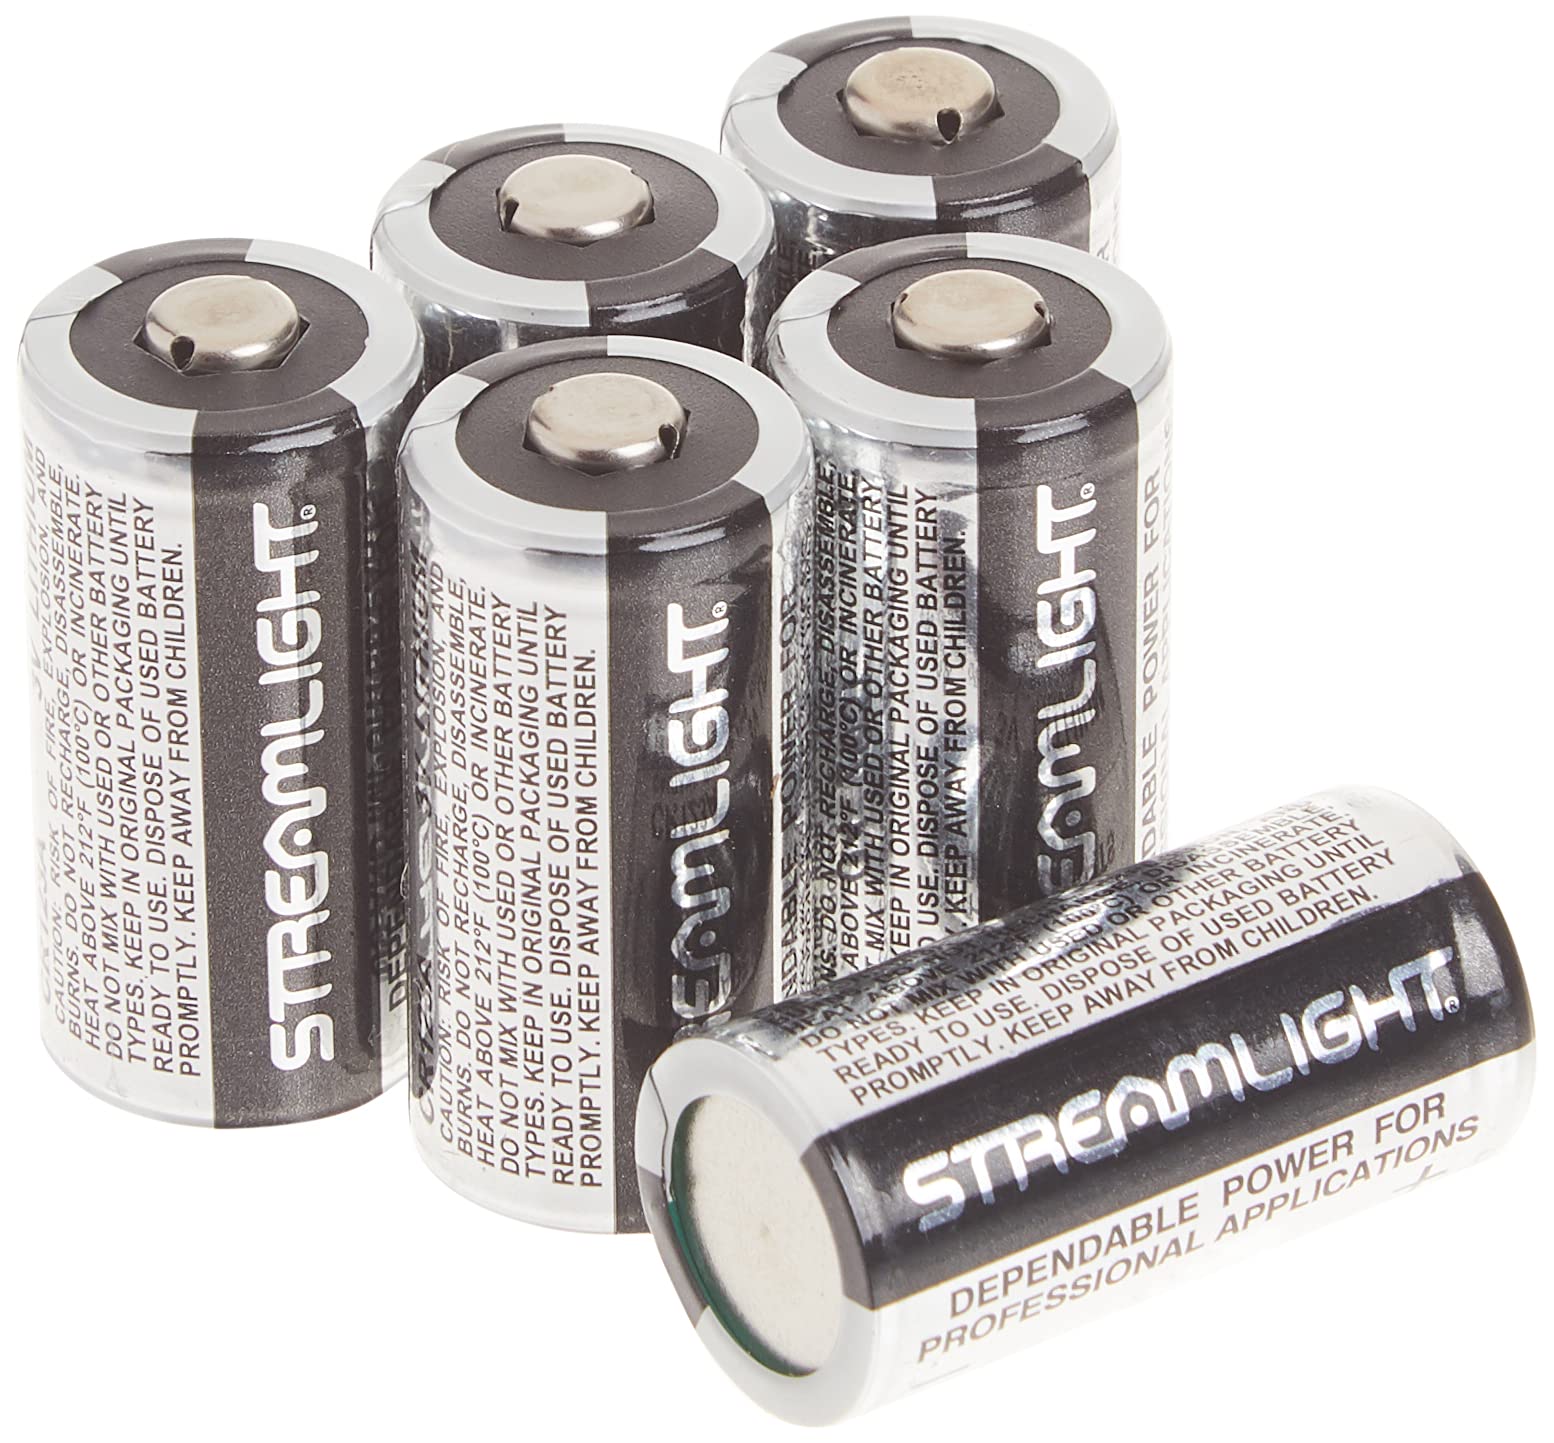 Streamlight 85180 3V CR123A Lithium Batteries, 6-Pack, Black